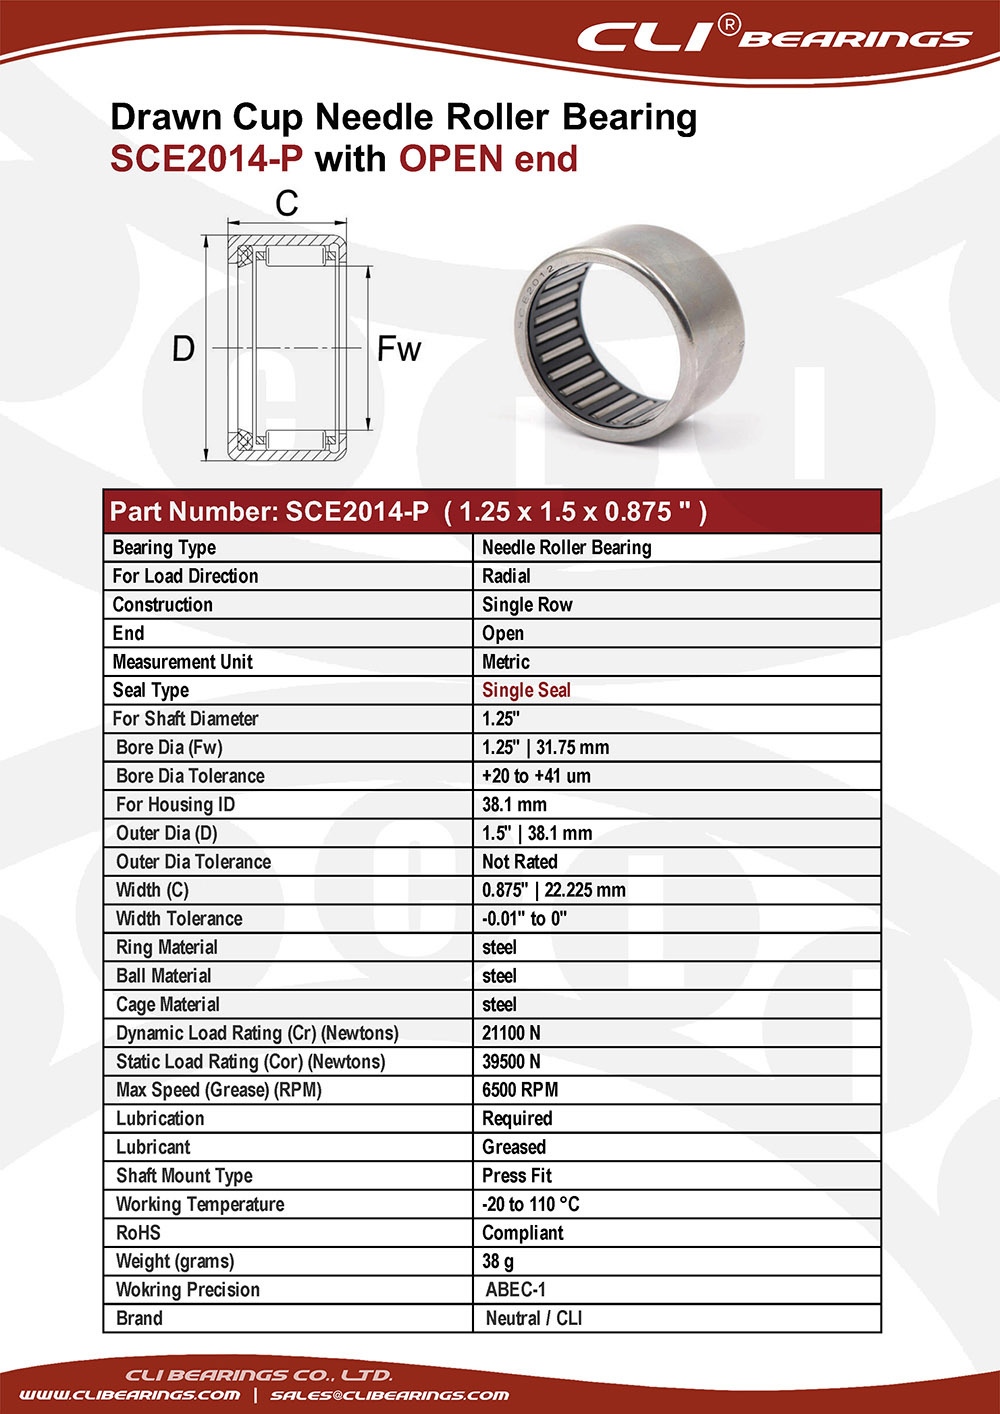 Original sce2014 p 1 25x1 5x0 875 drawn cup needle roller bearings with single seal   cli bearings co ltd nw